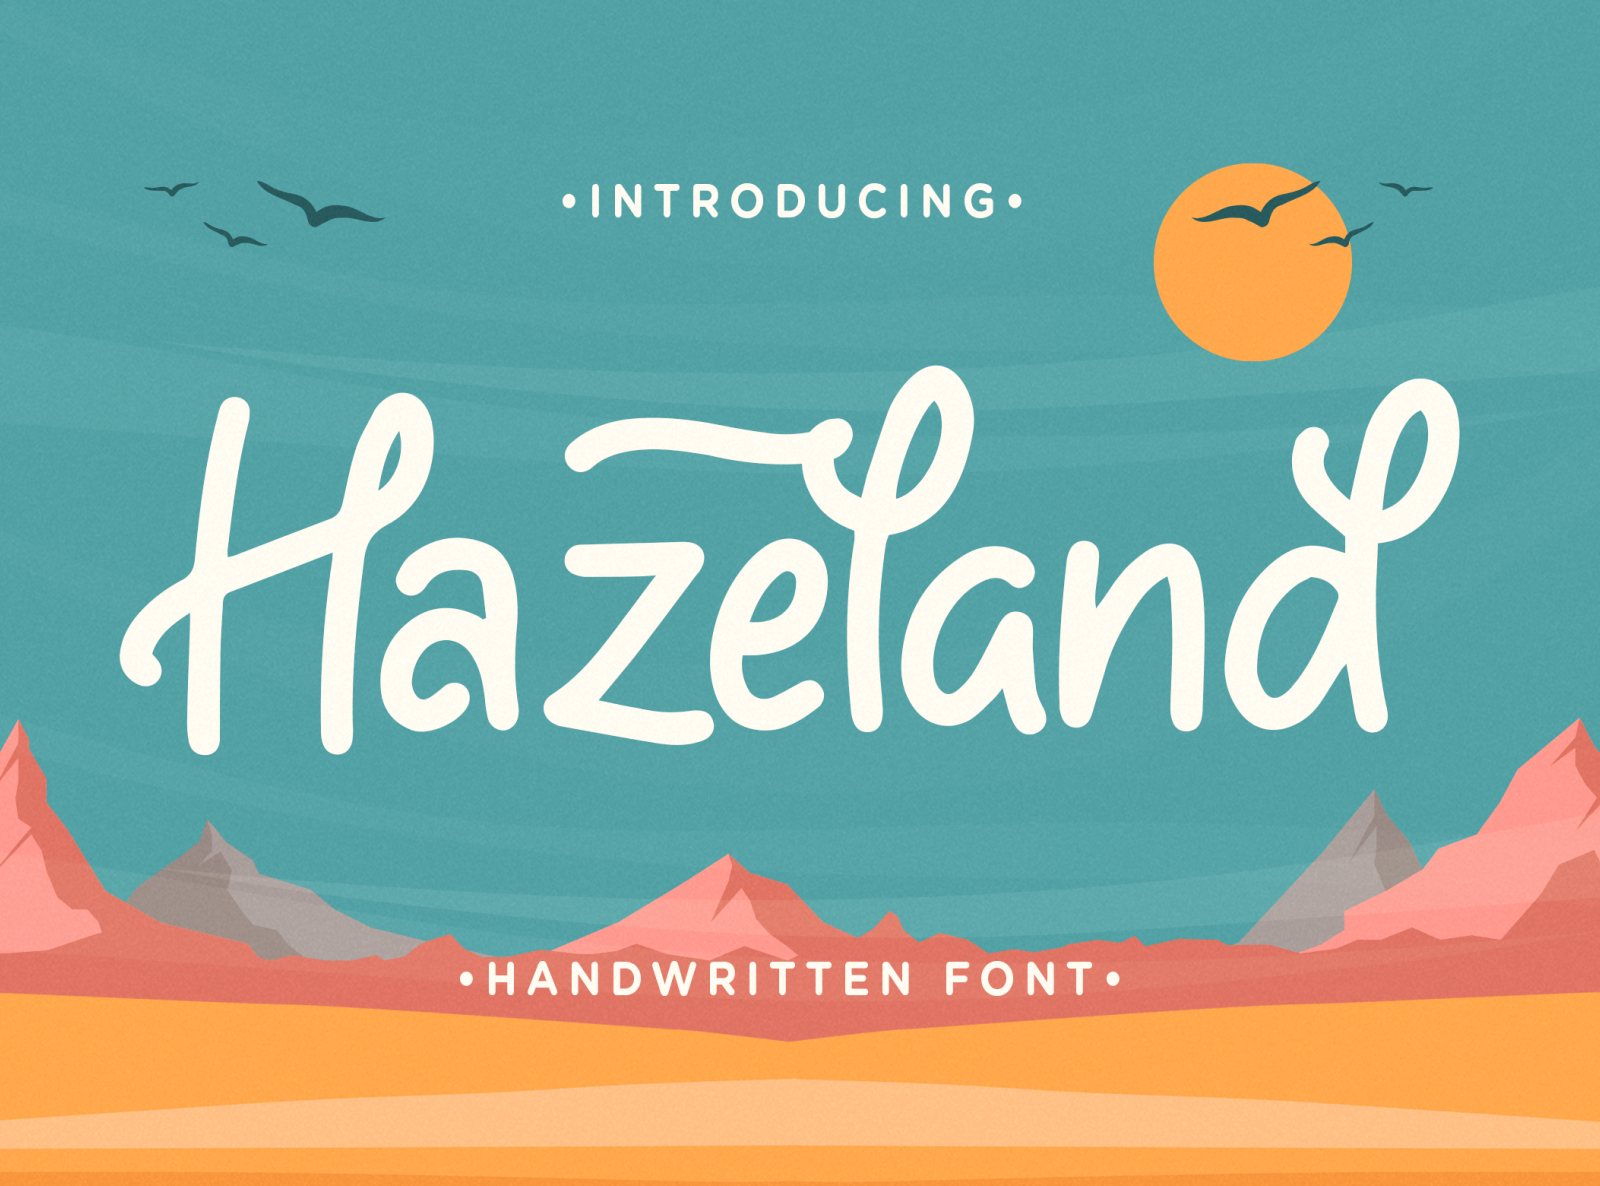 Hazeland - Handwritten Font by TypeFactory Co on Dribbble